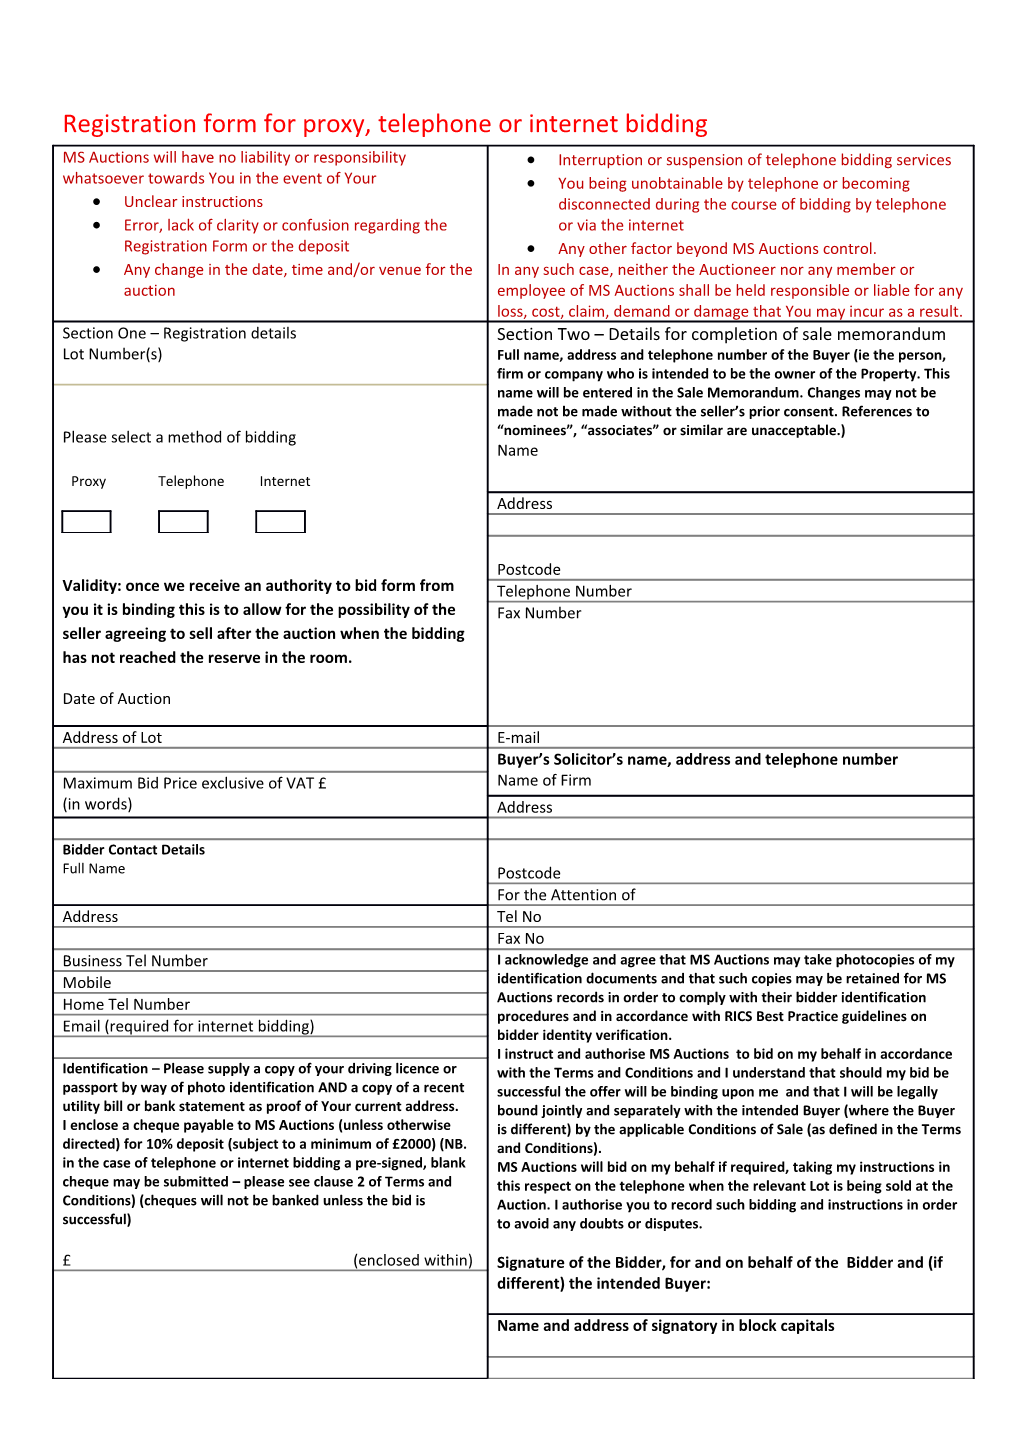 Registration Form for Proxy, Telephone Or Internet Bidding